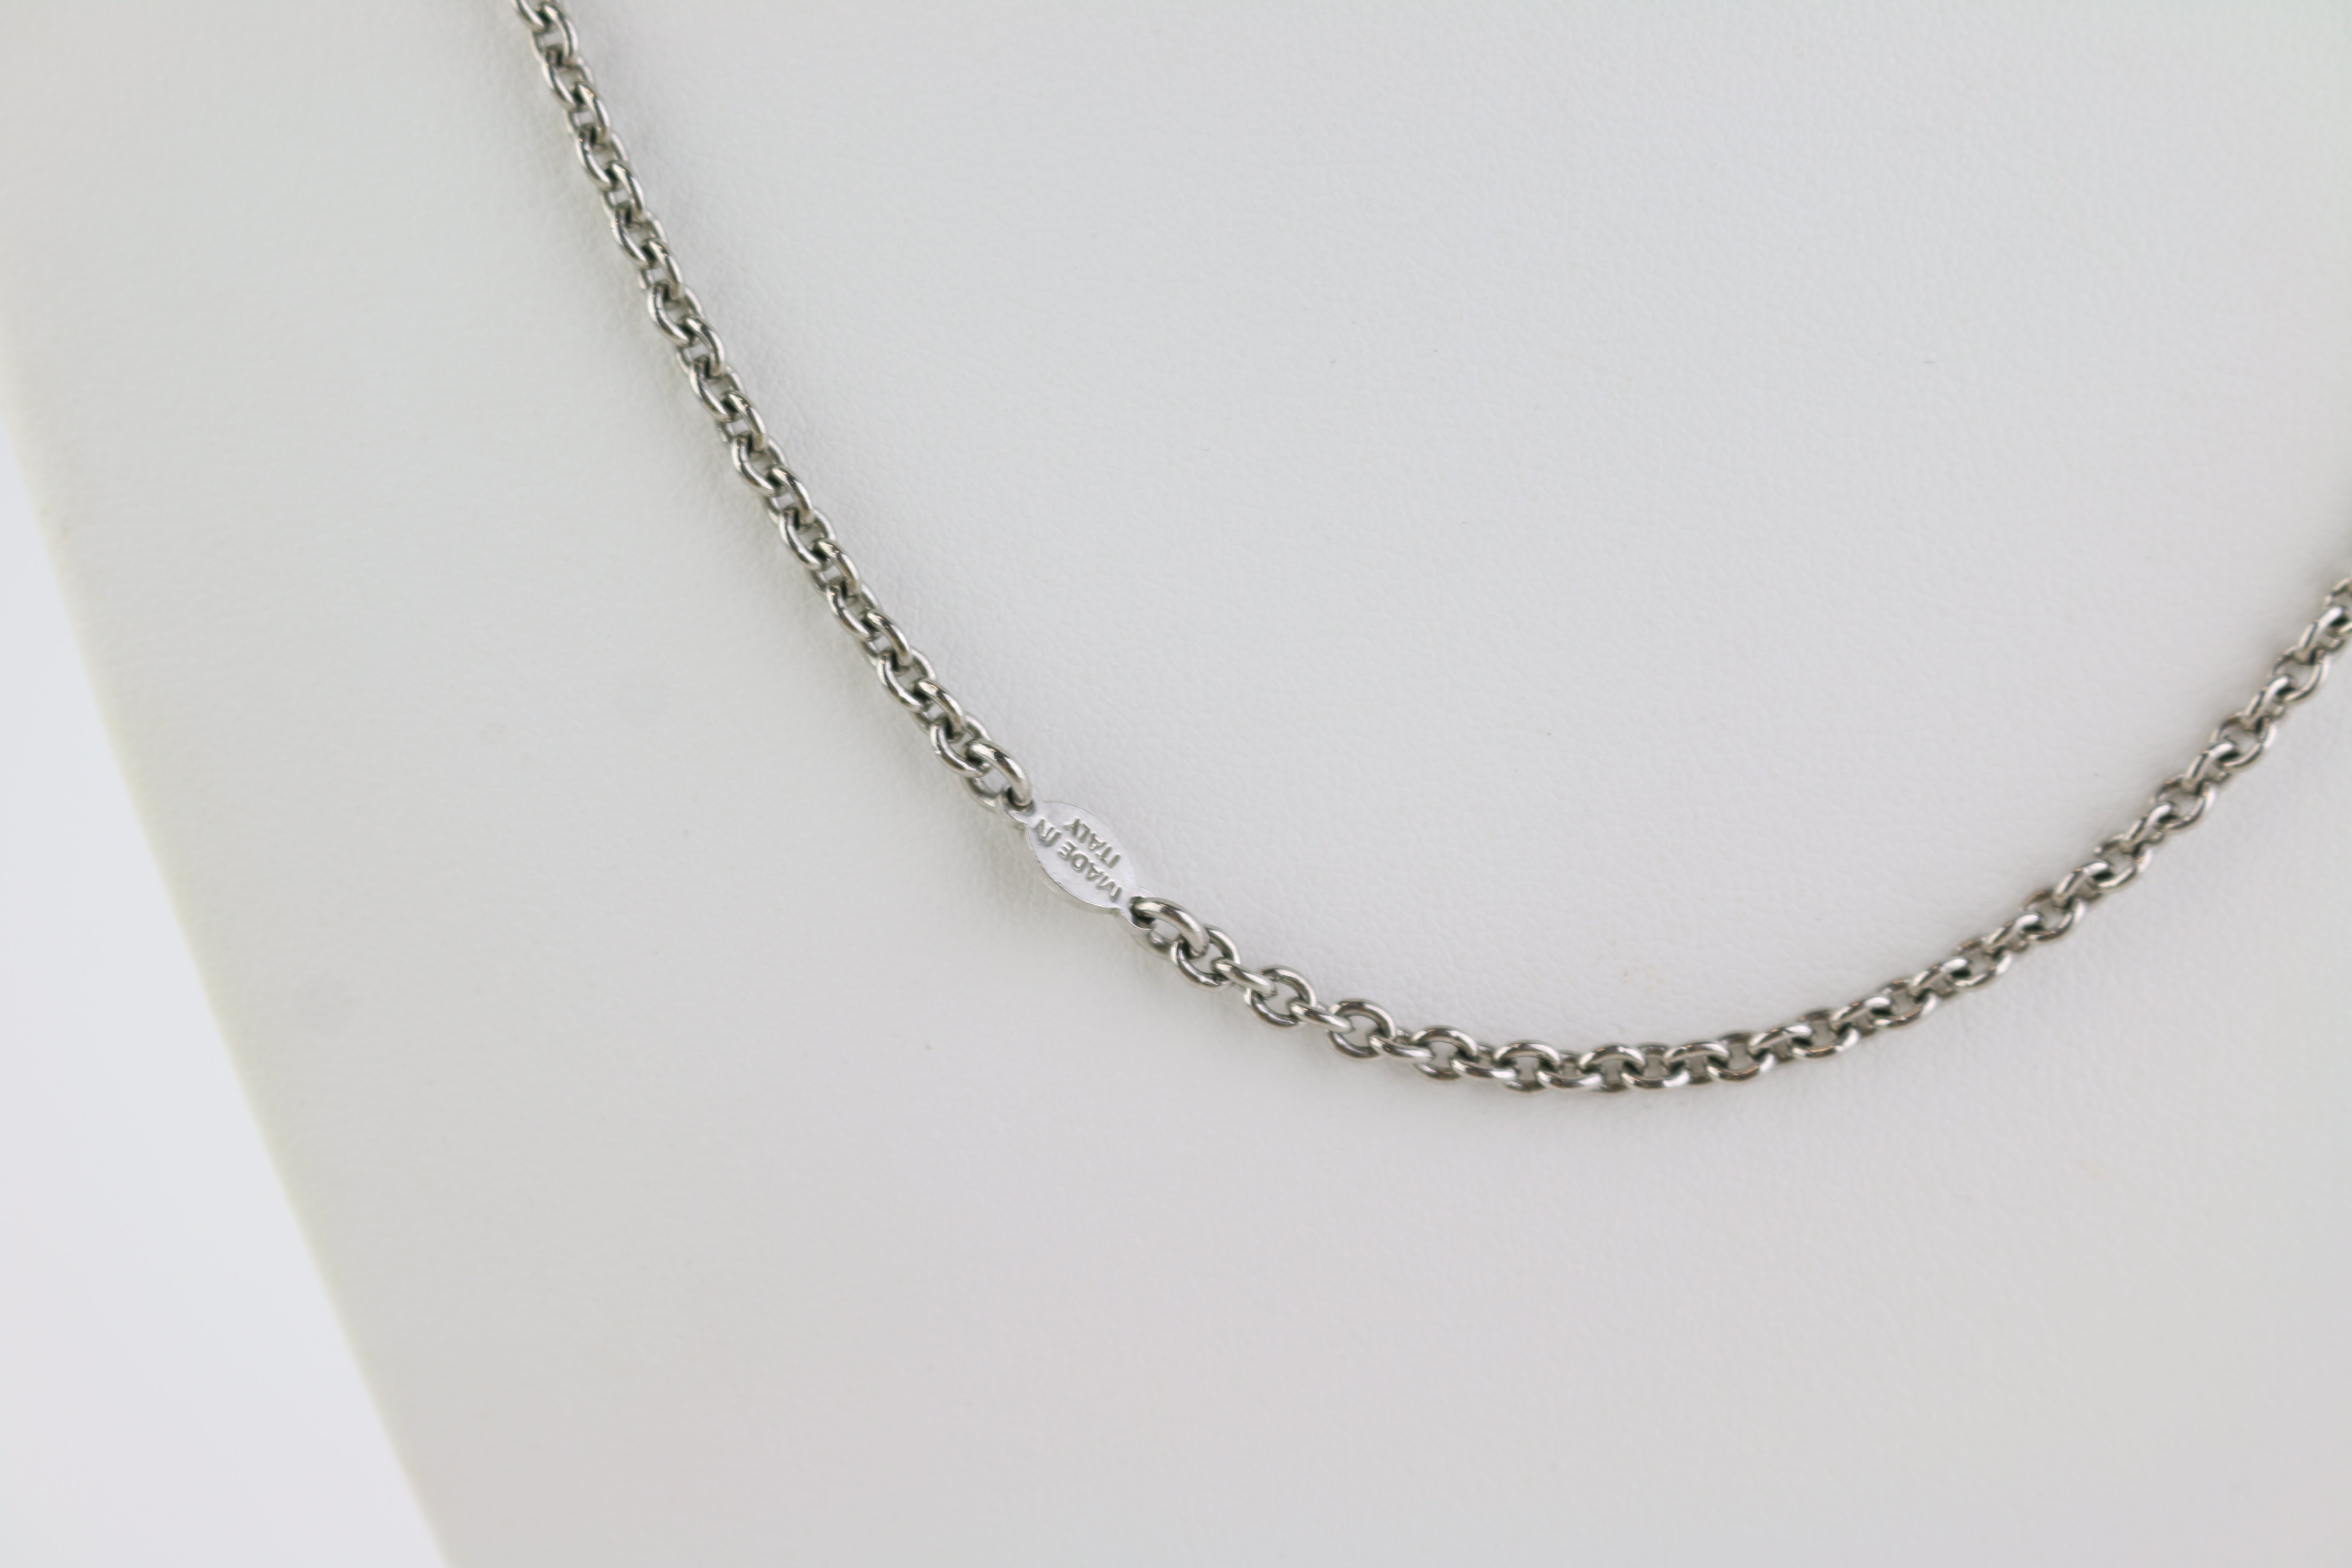 Silver/Crystal Skull Necklace